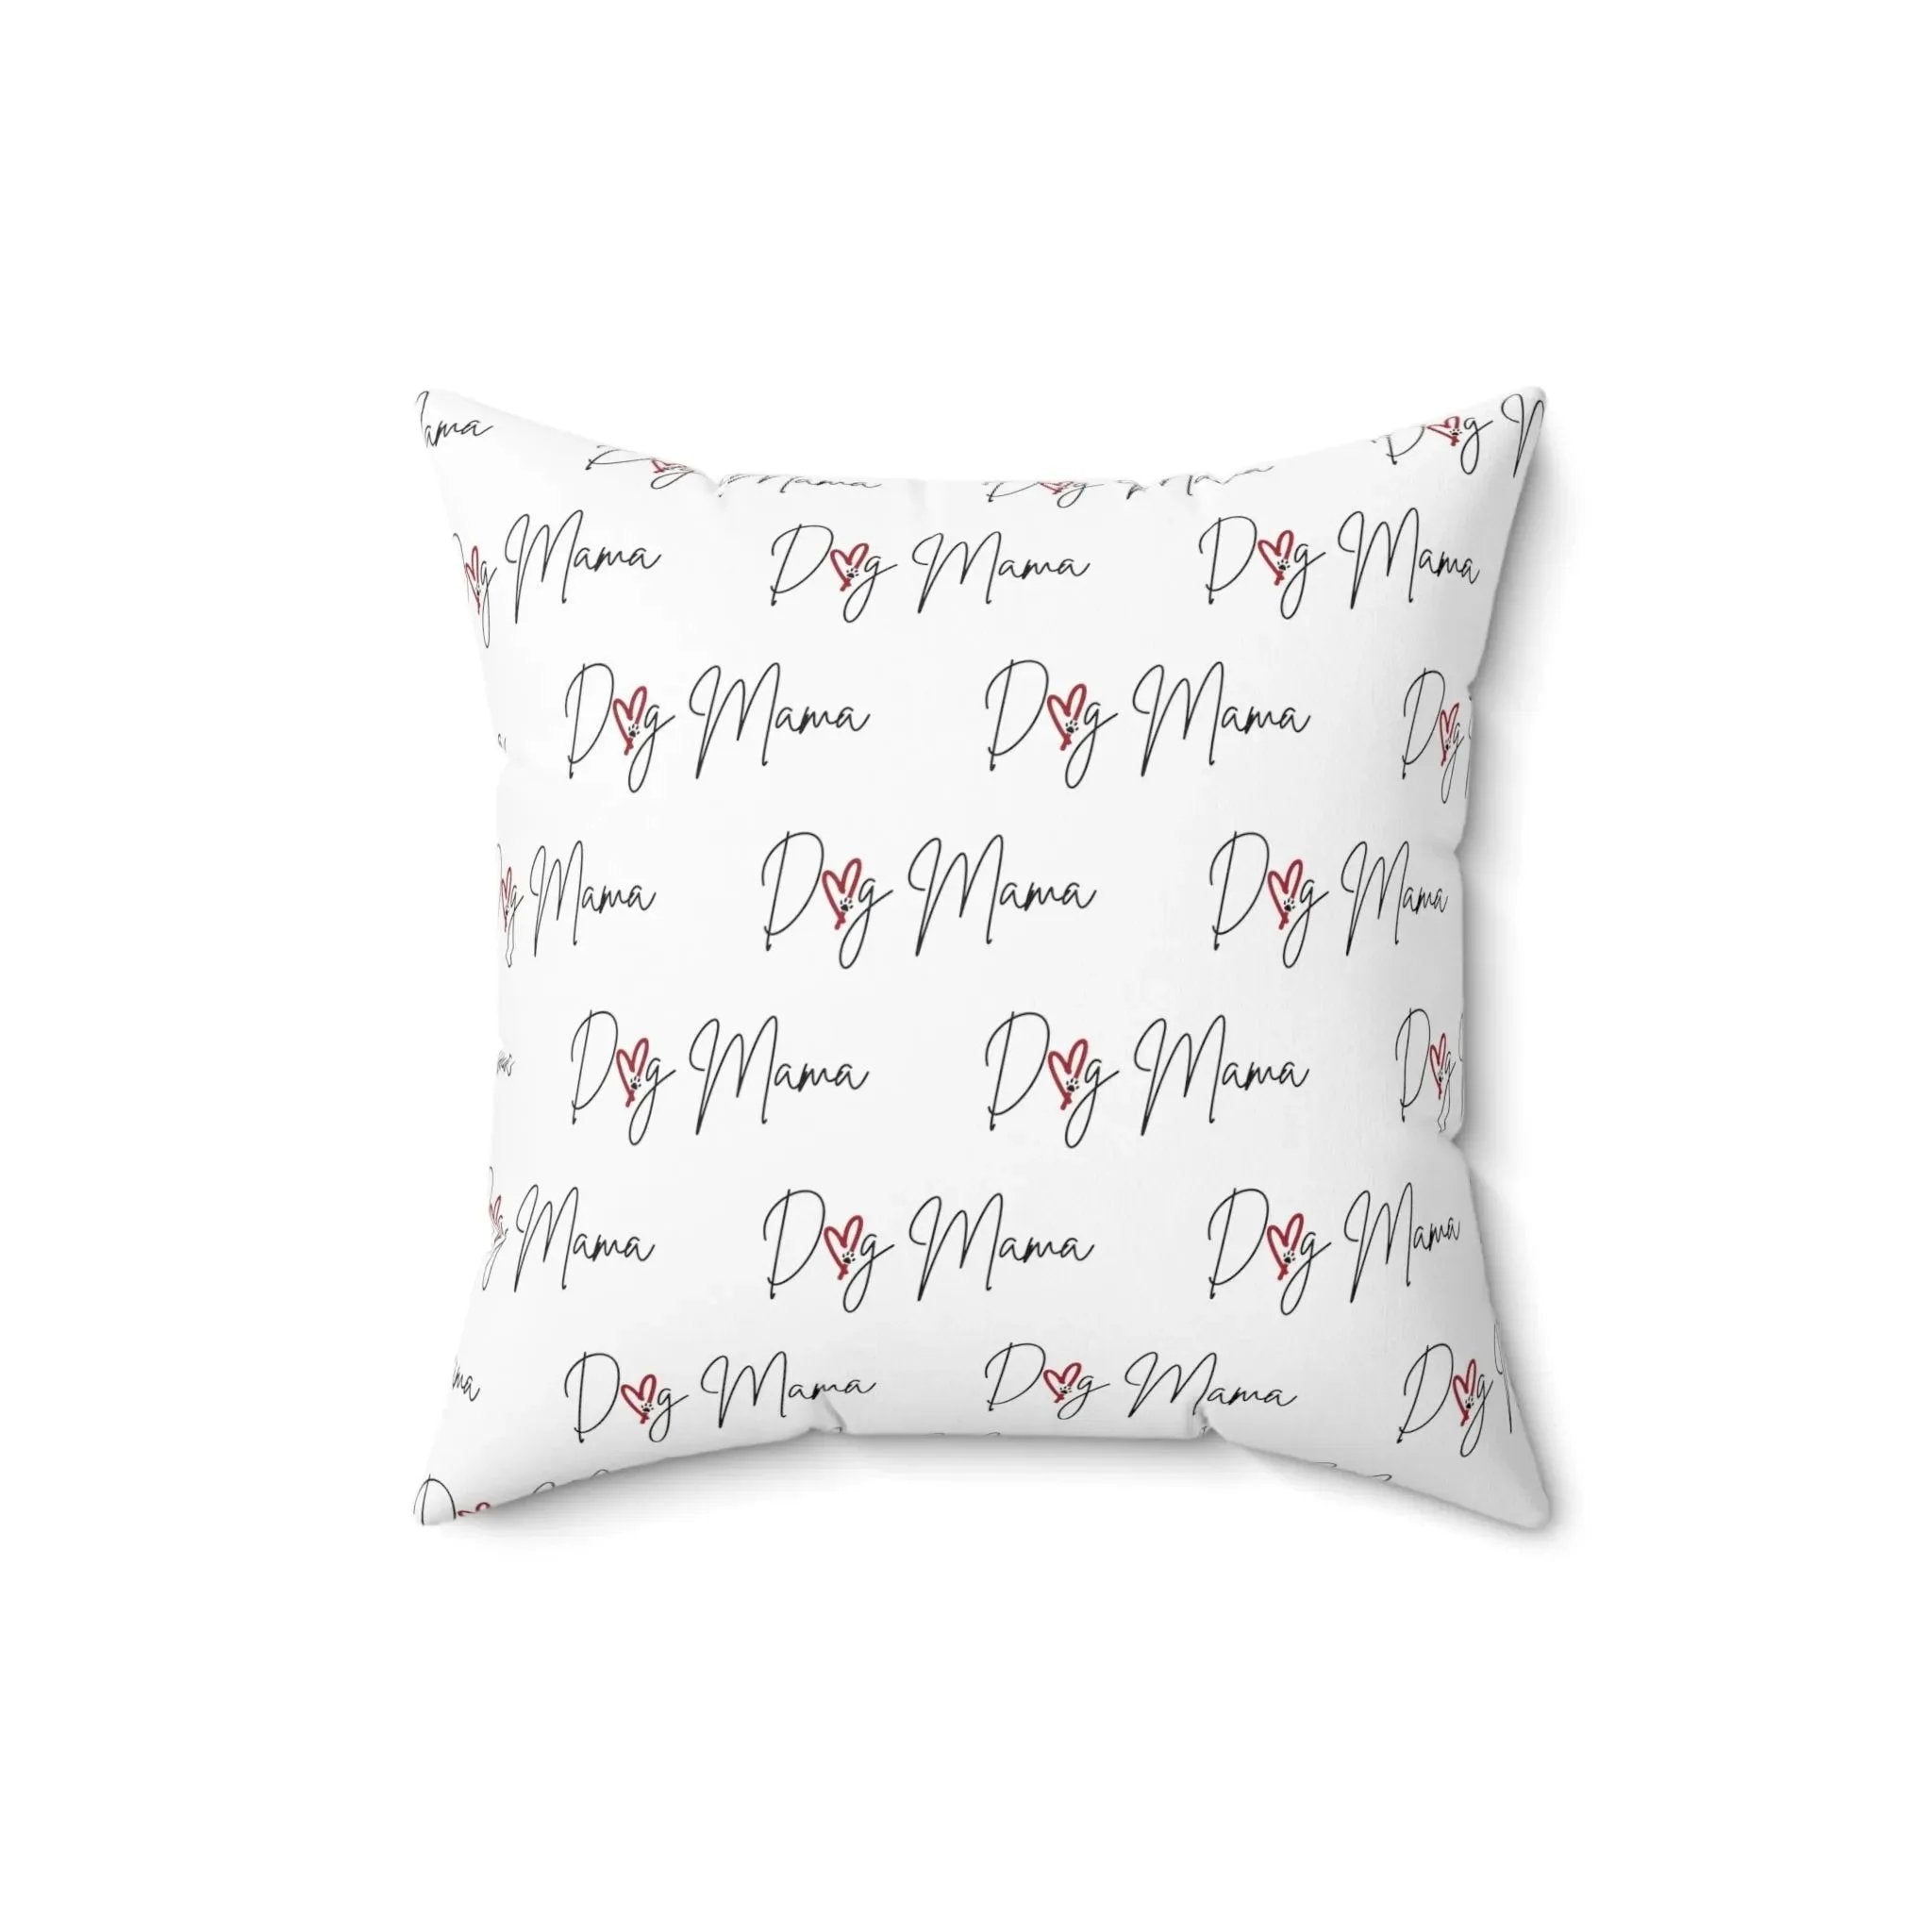 Dog Mama Stylized Square Throw Pillow | 3 Sizes | White Background